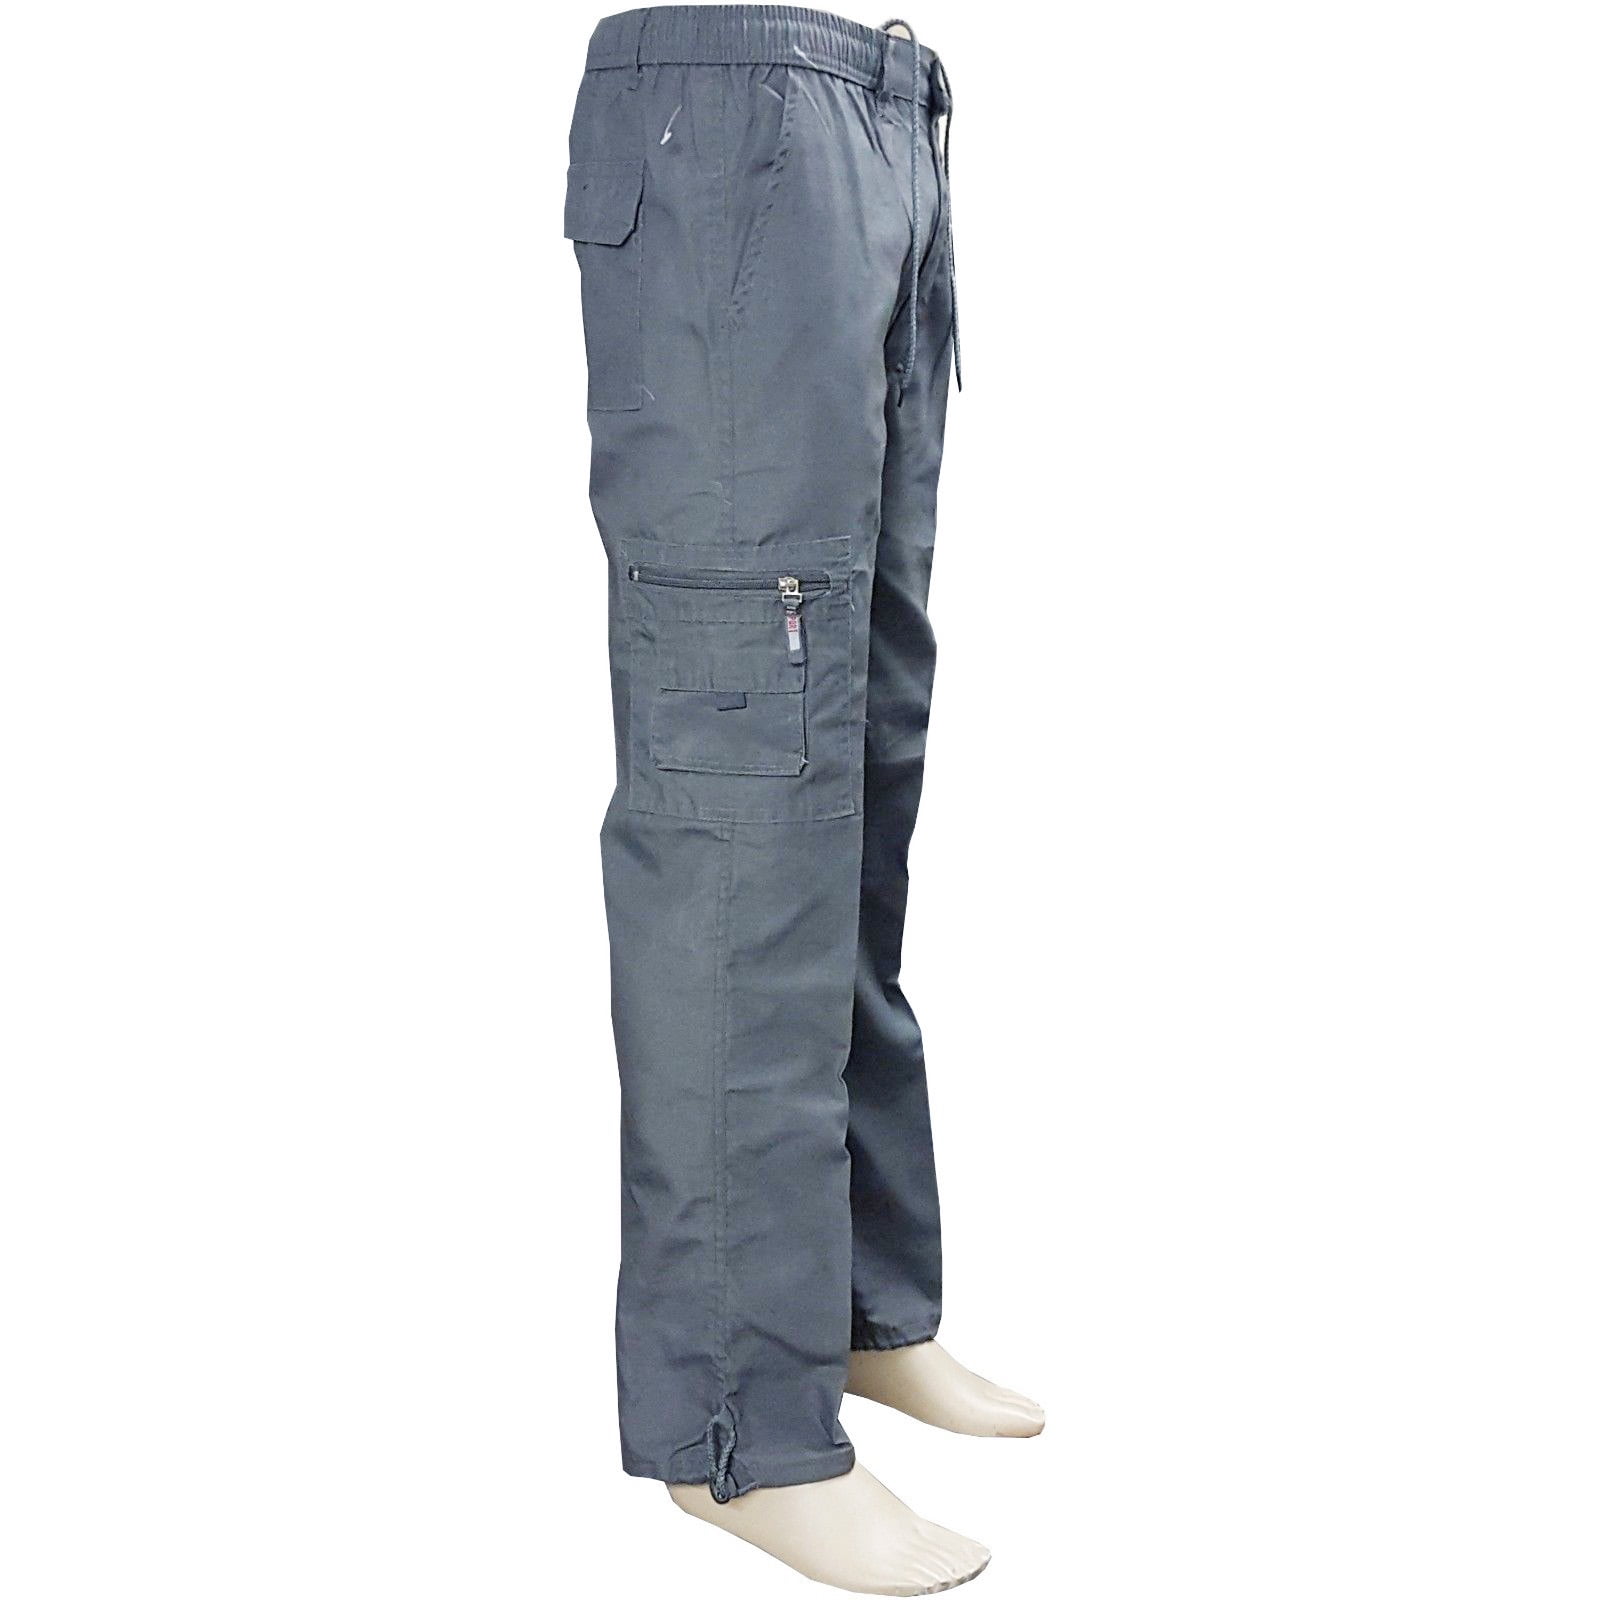 Mens Work Cargo Pant Knee Pad Pocket Heavy Duty Combat Outdoor Work wear Trouser 